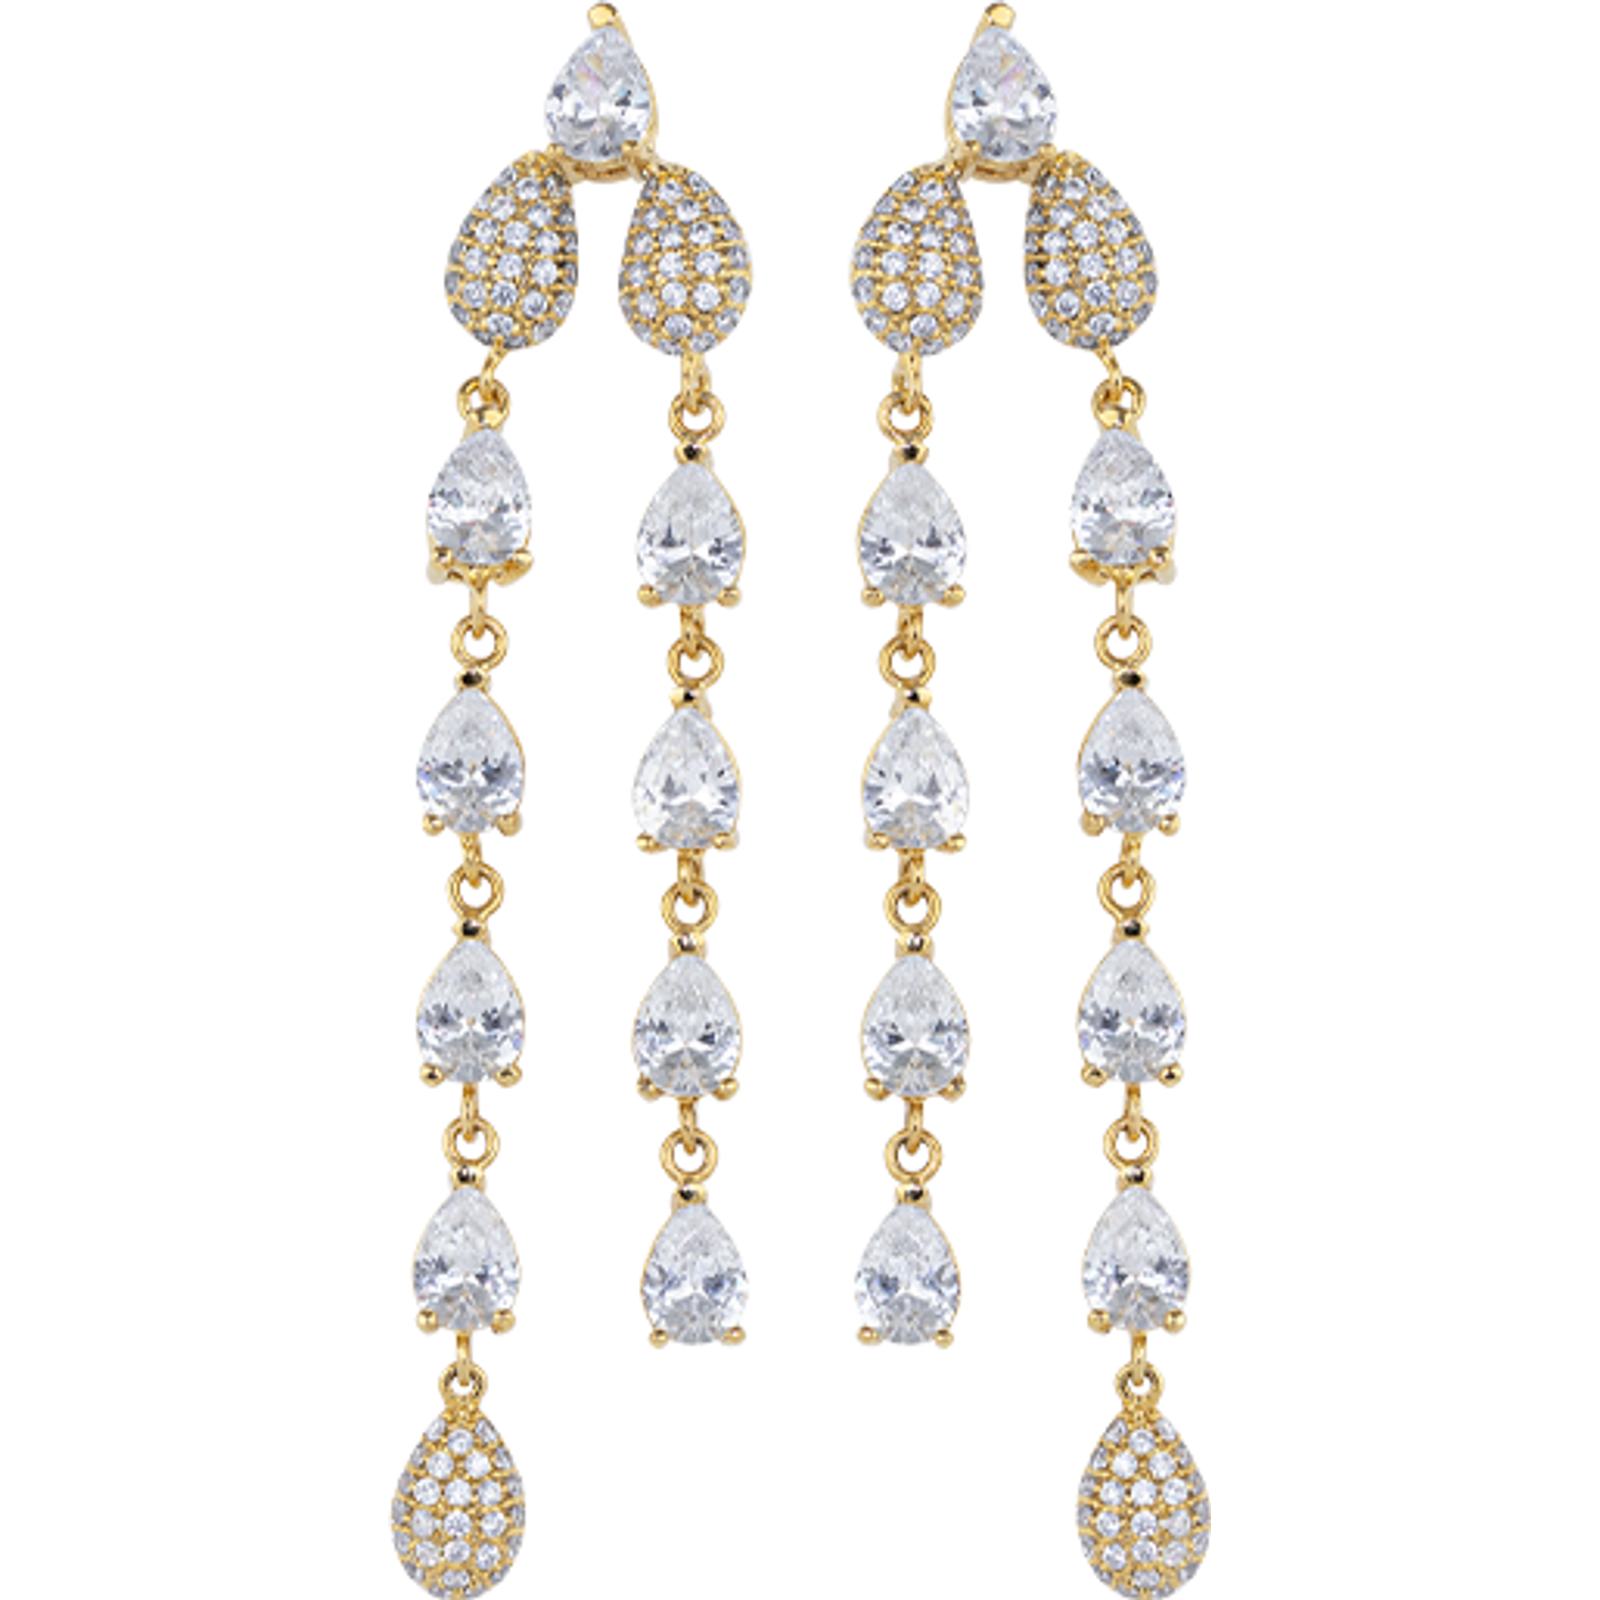 Earrings Dobles Asimétrico Dorados con Zirconia Blanca